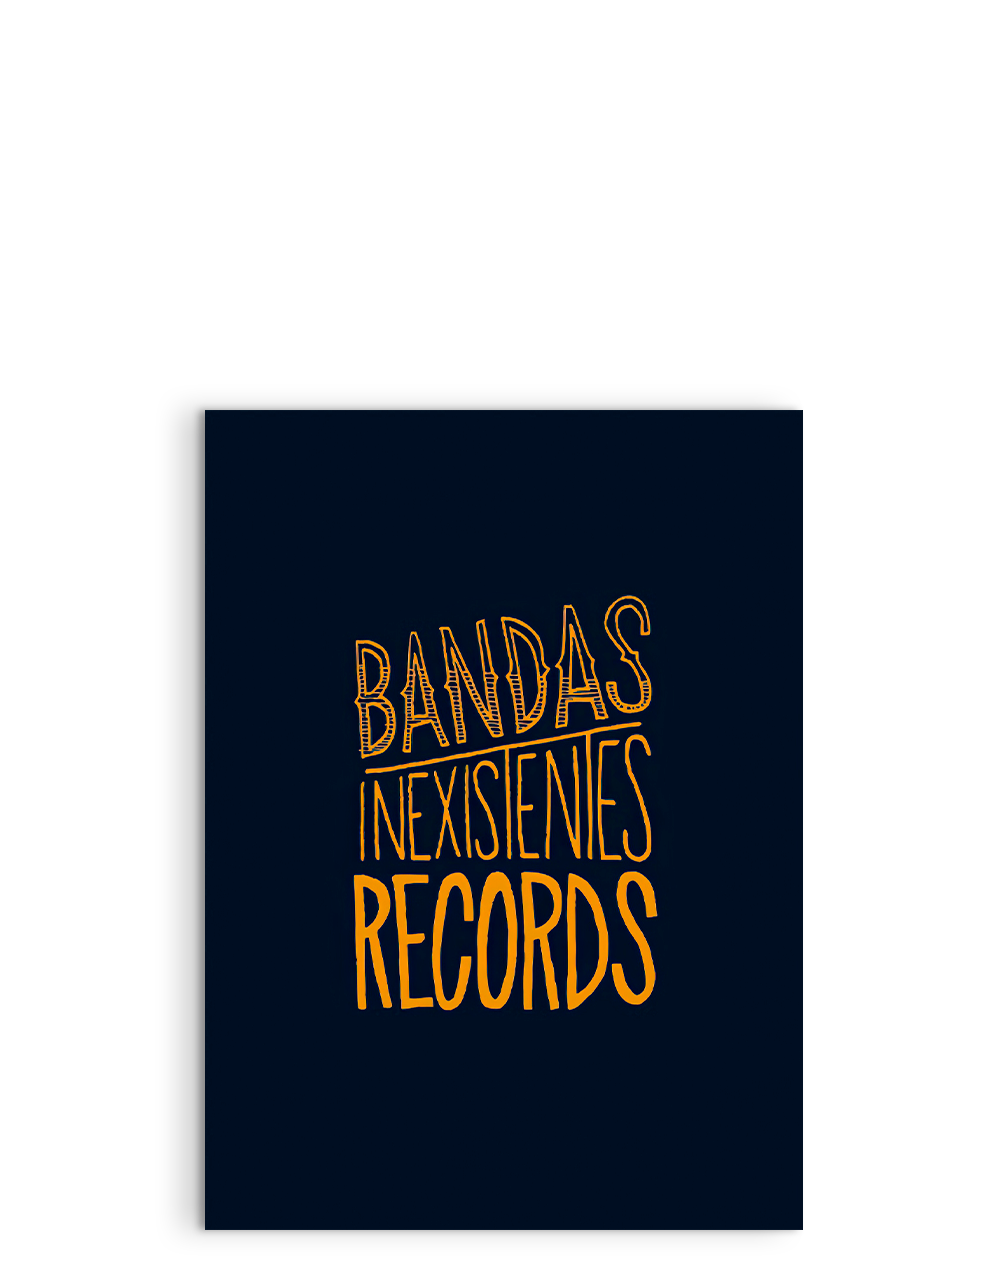 web_0031_Bandas-inexistentes-records.png